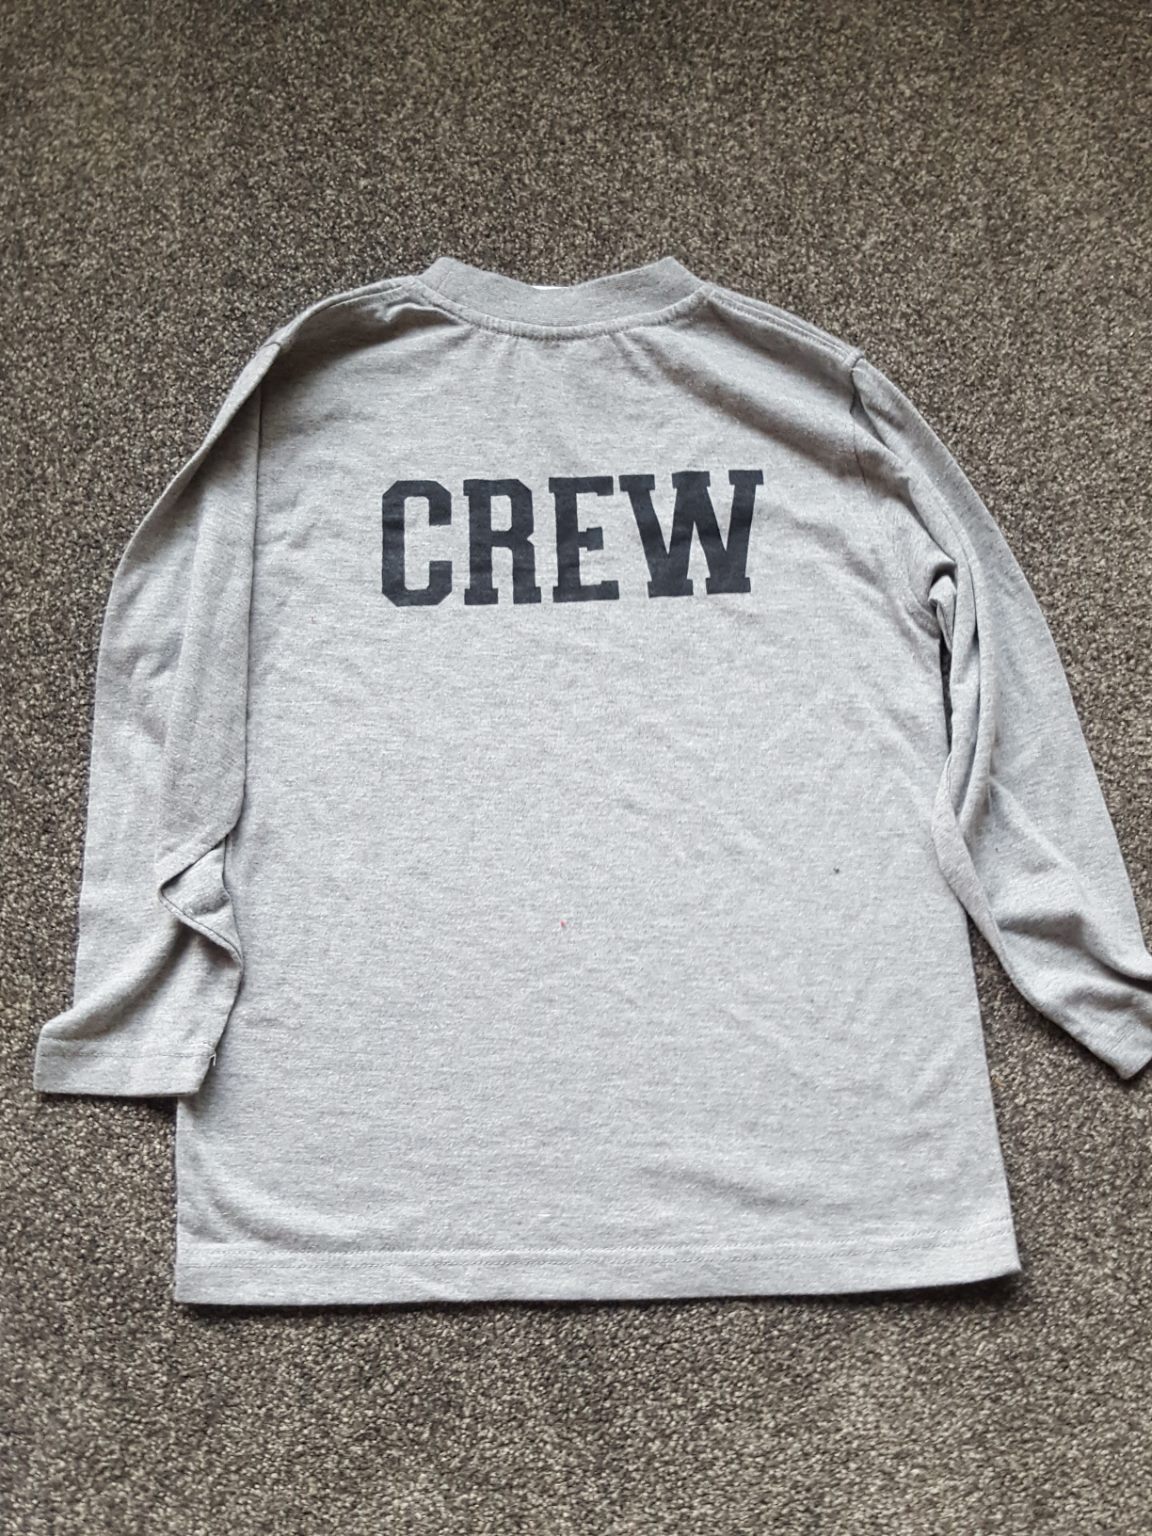 crew shirt